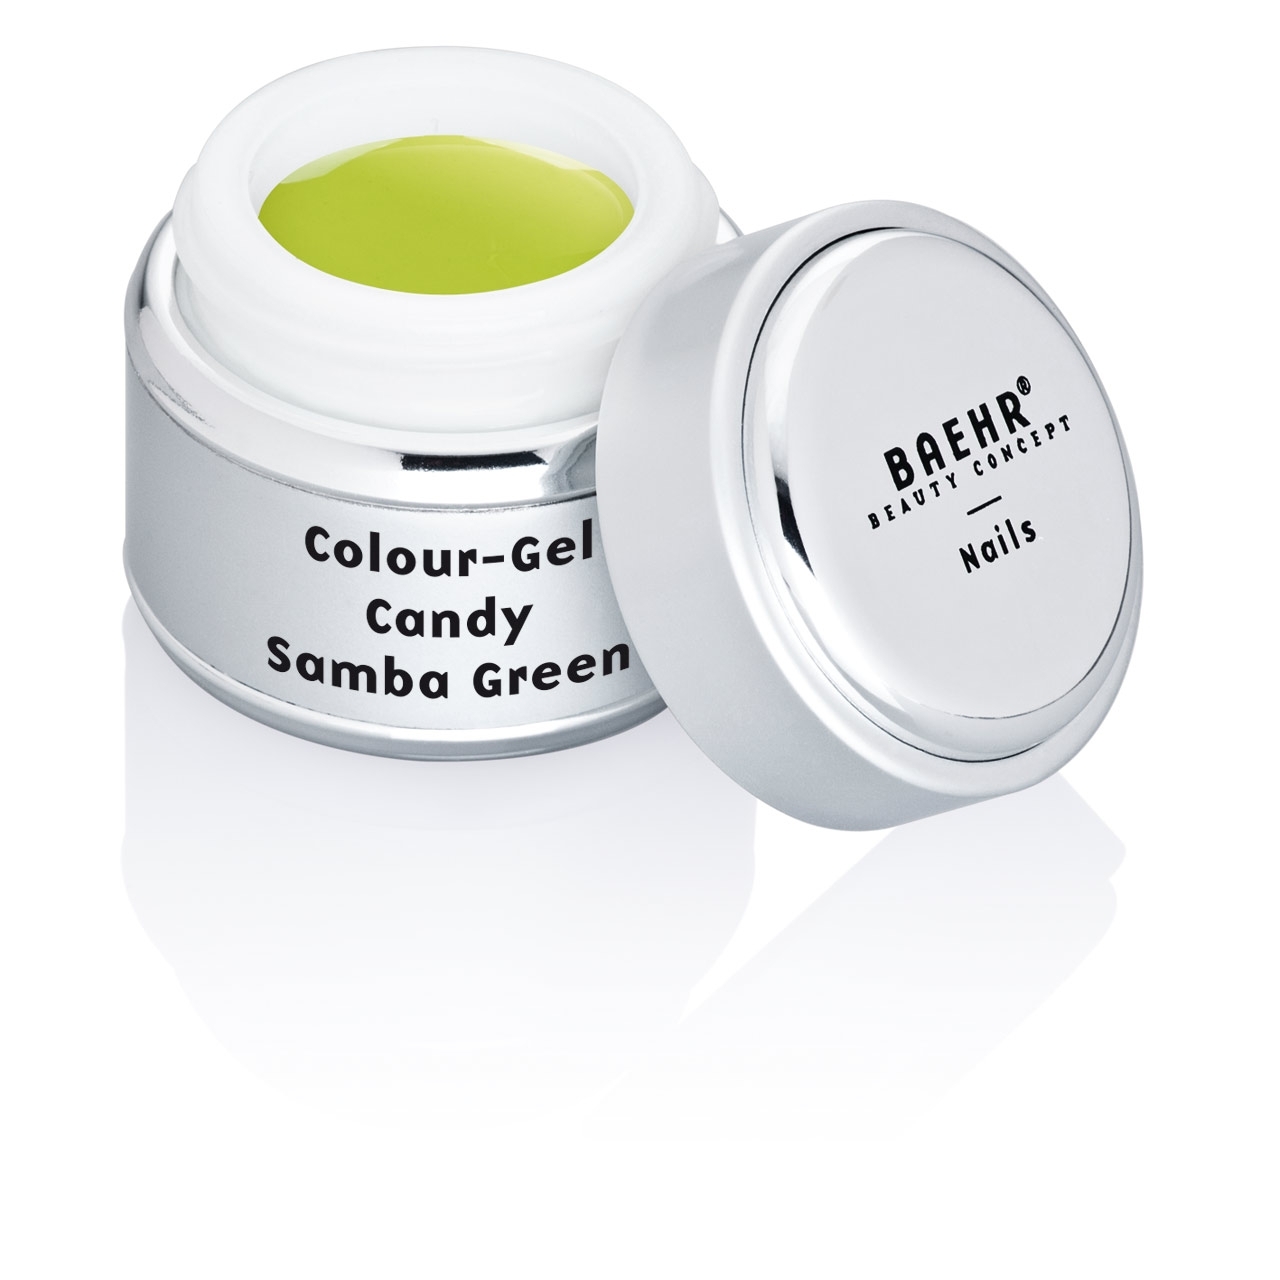 BAEHR BEAUTY CONCEPT NAILS Colour-Gel Candy Samba Green 5 ml